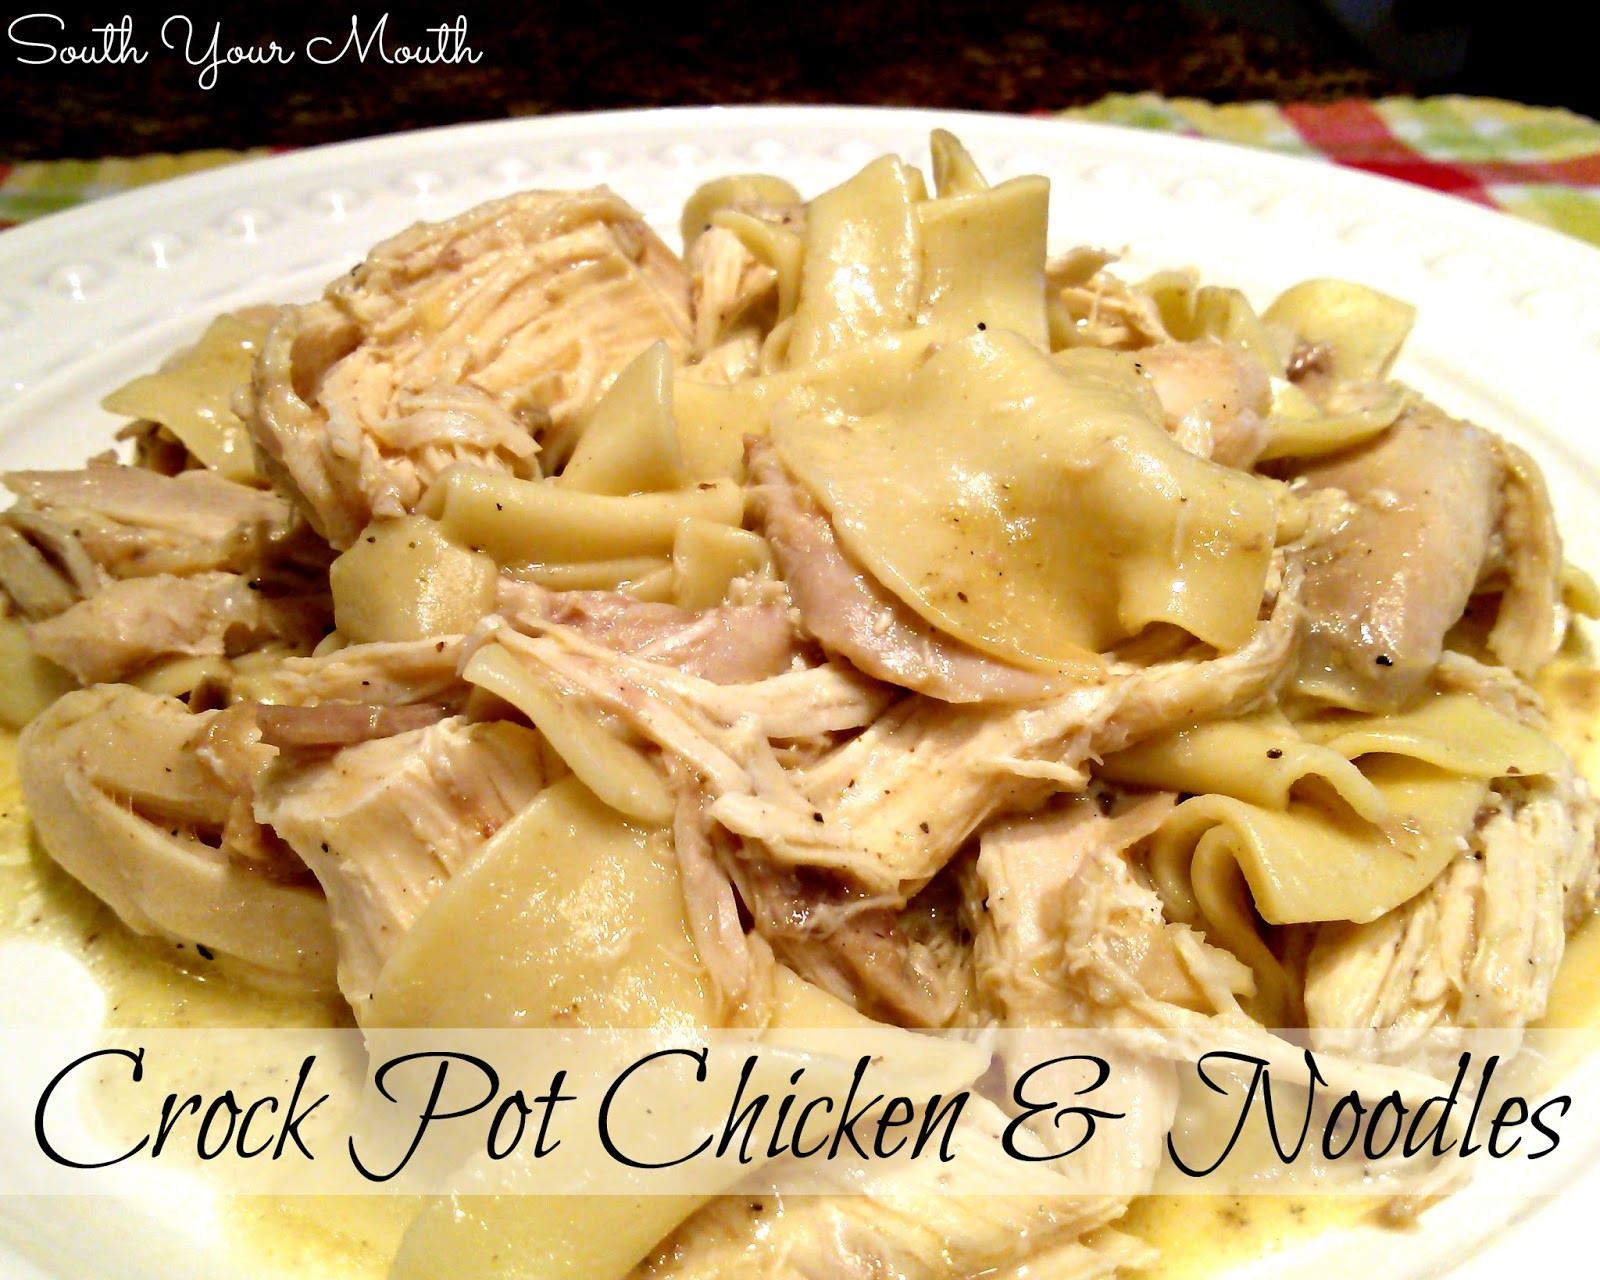 Chicken Noodles Crock Pot Recipe
 South Your Mouth Crock Pot Chicken and Noodles